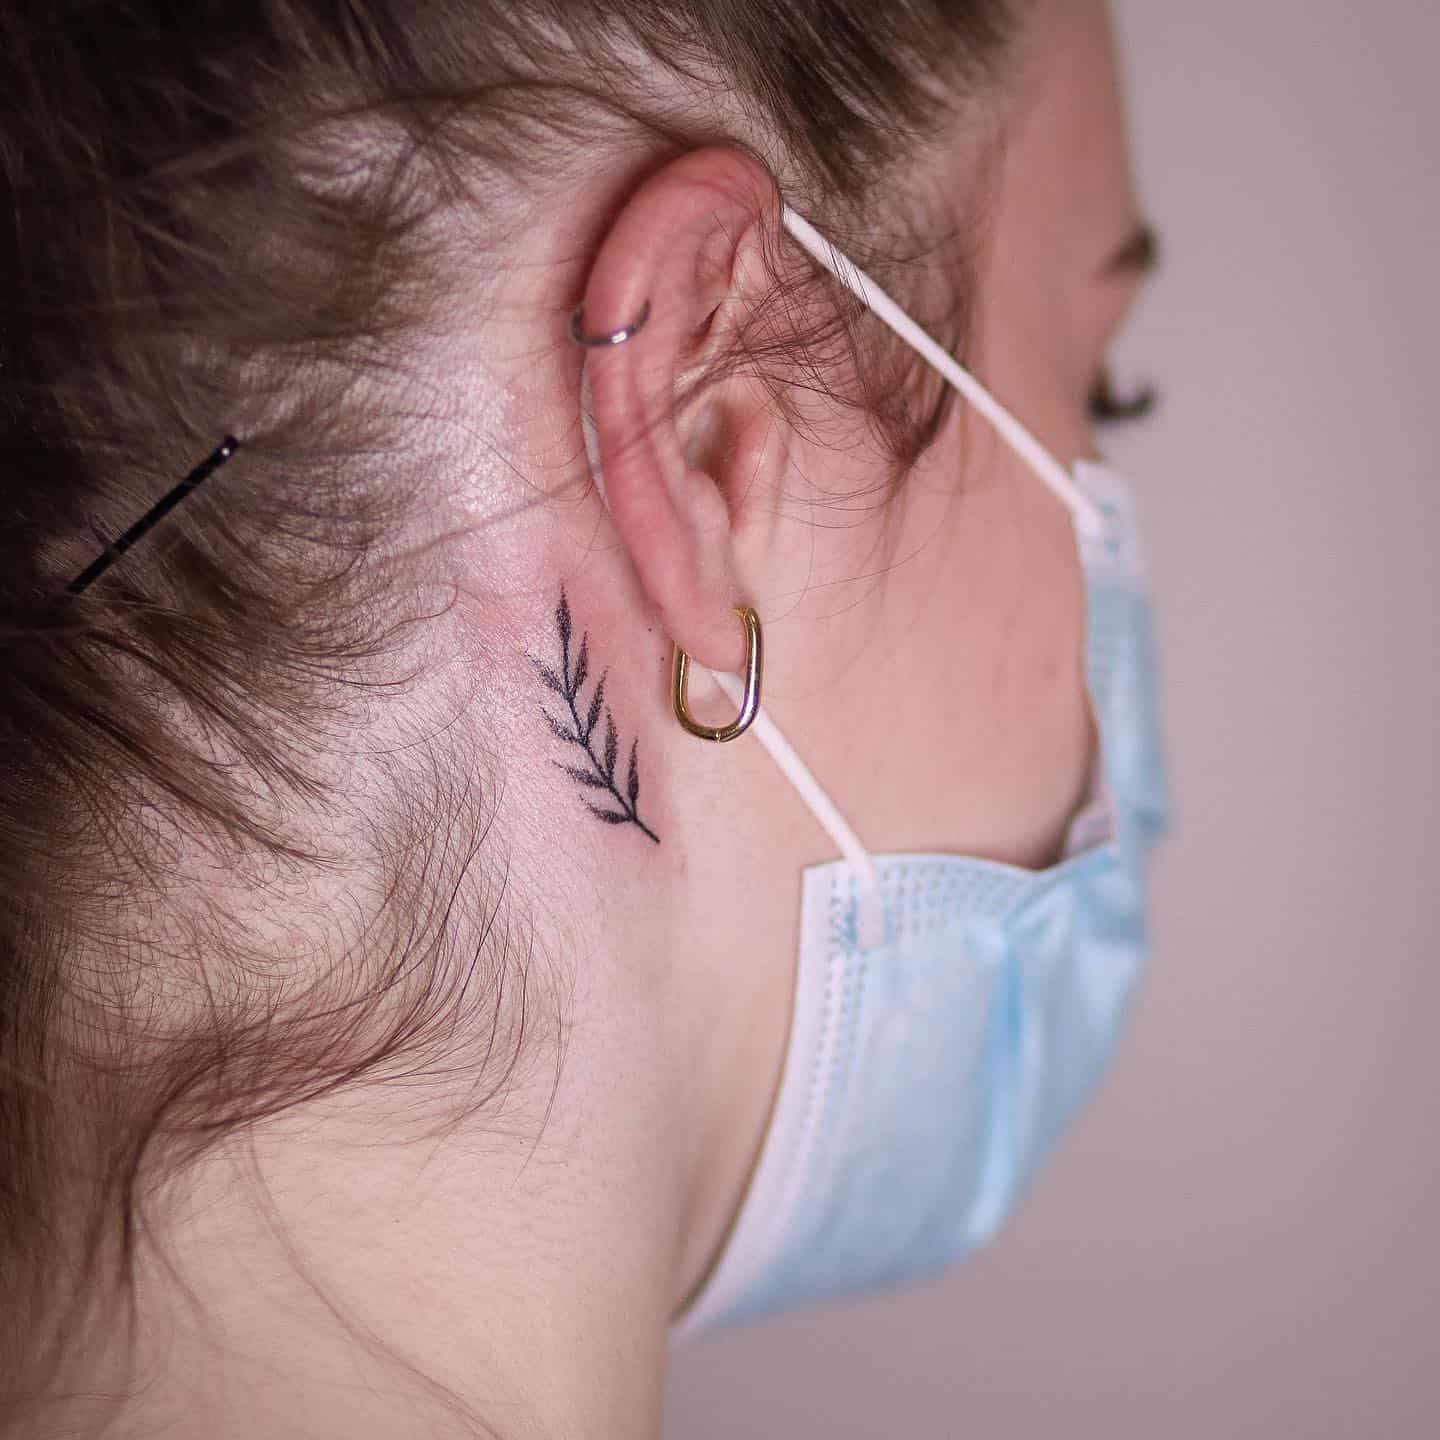 Behind The Ear Tattoo Design